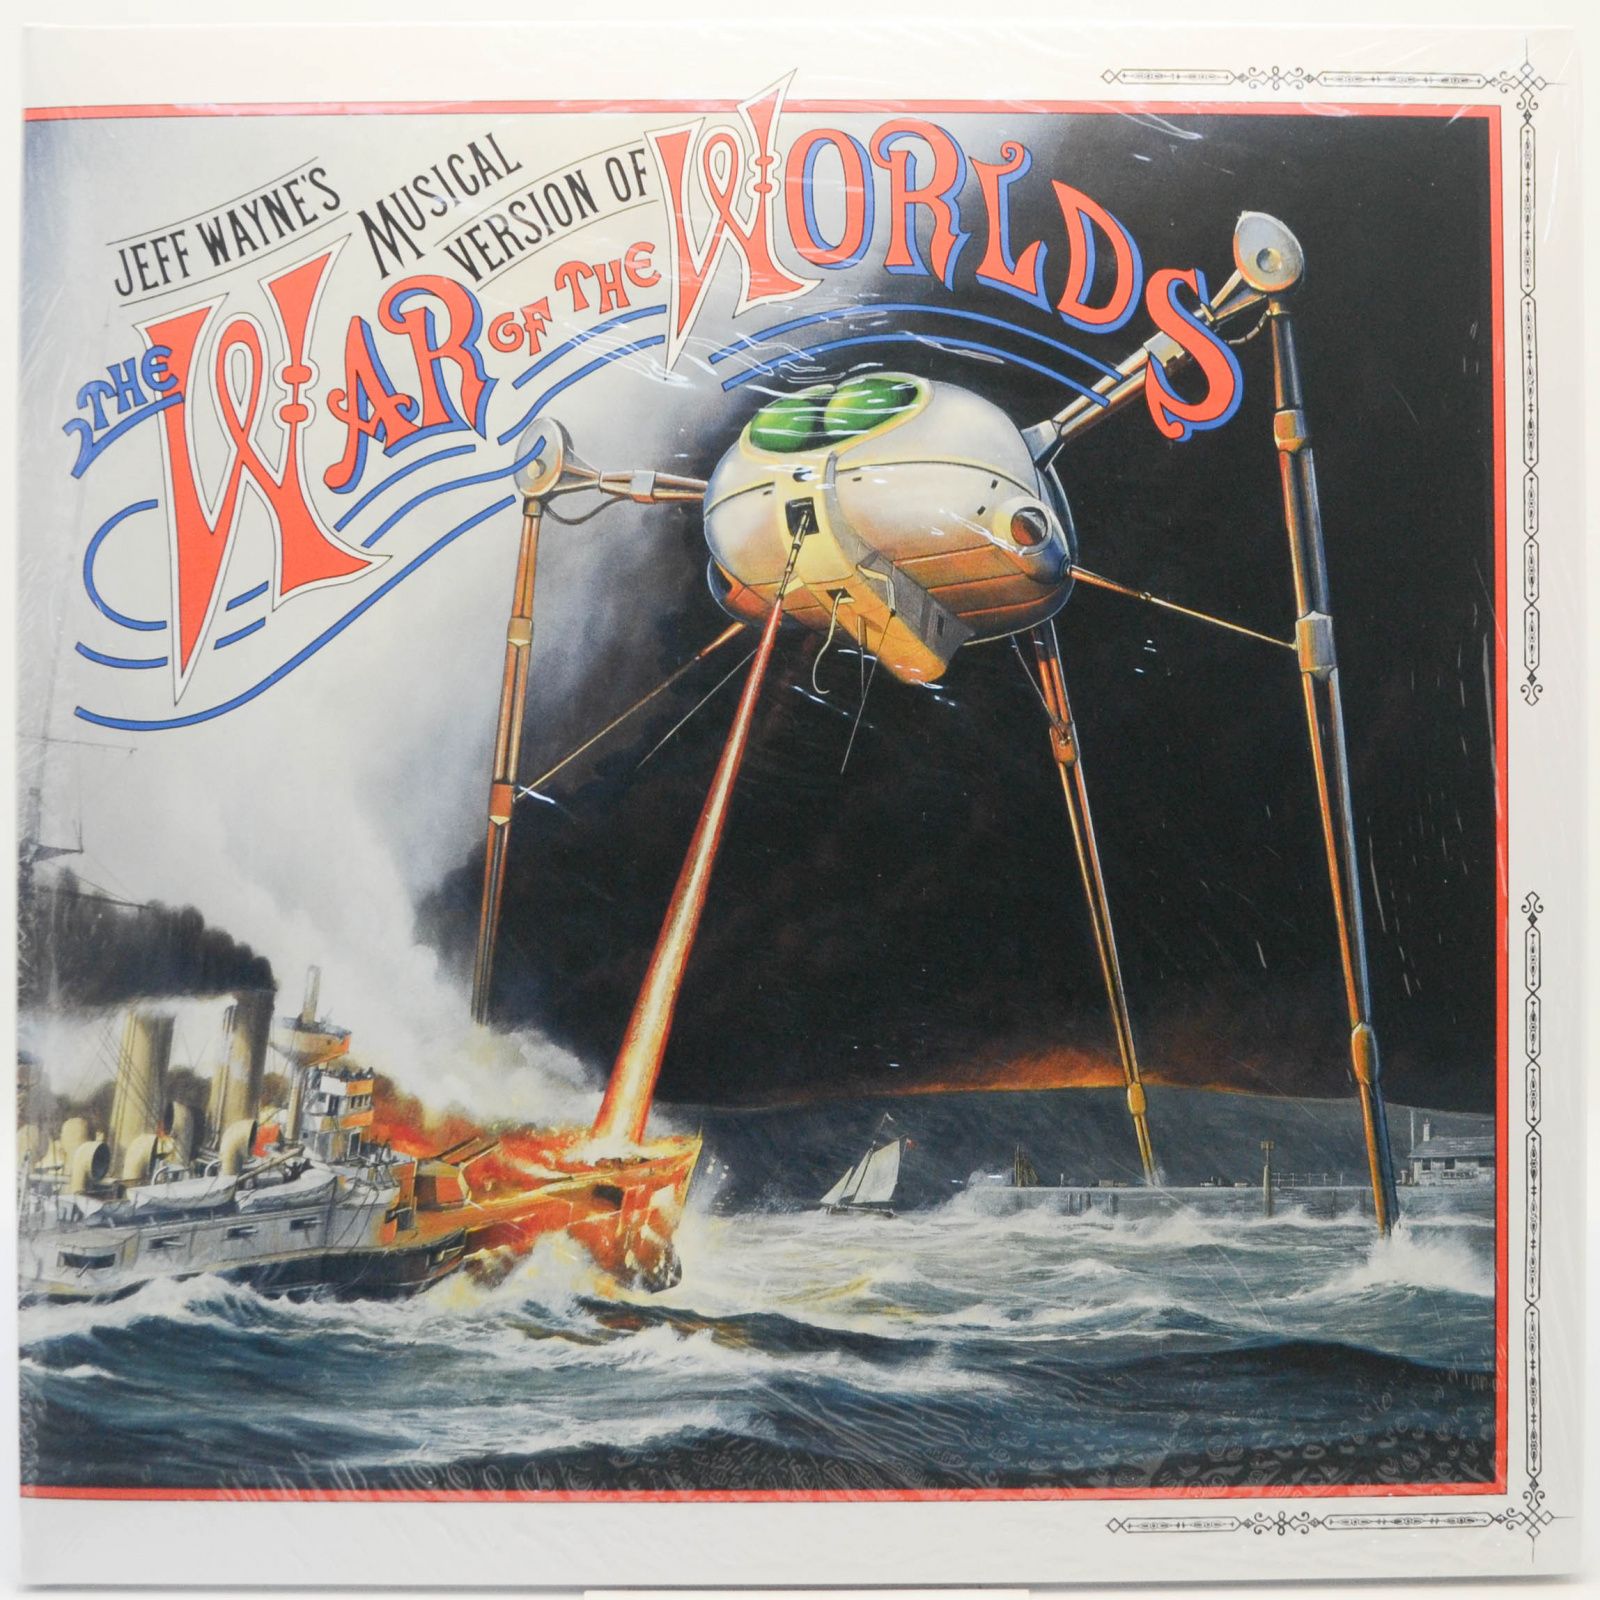 Jeff Wayne — Jeff Wayne's Musical Version Of The War Of The Worlds (2LP), 1978